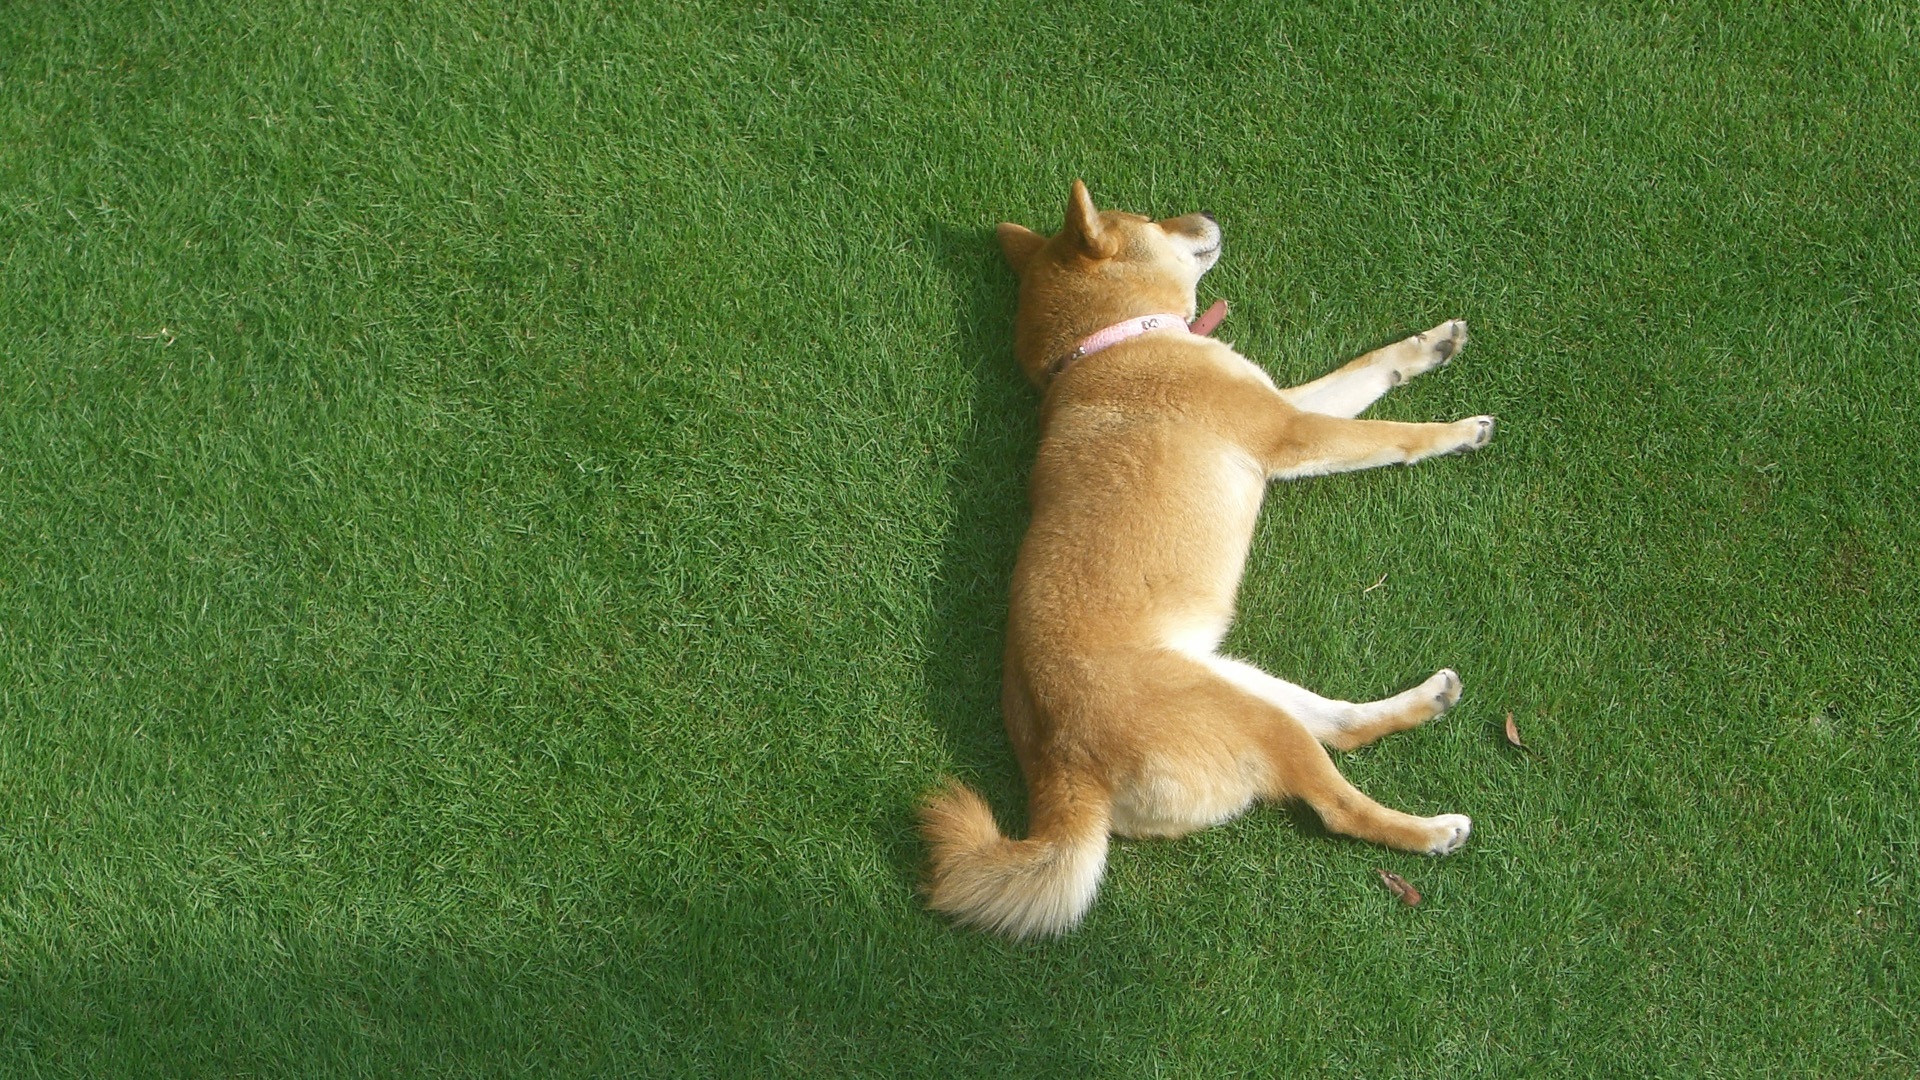 Shiba Inu is lying on the grass